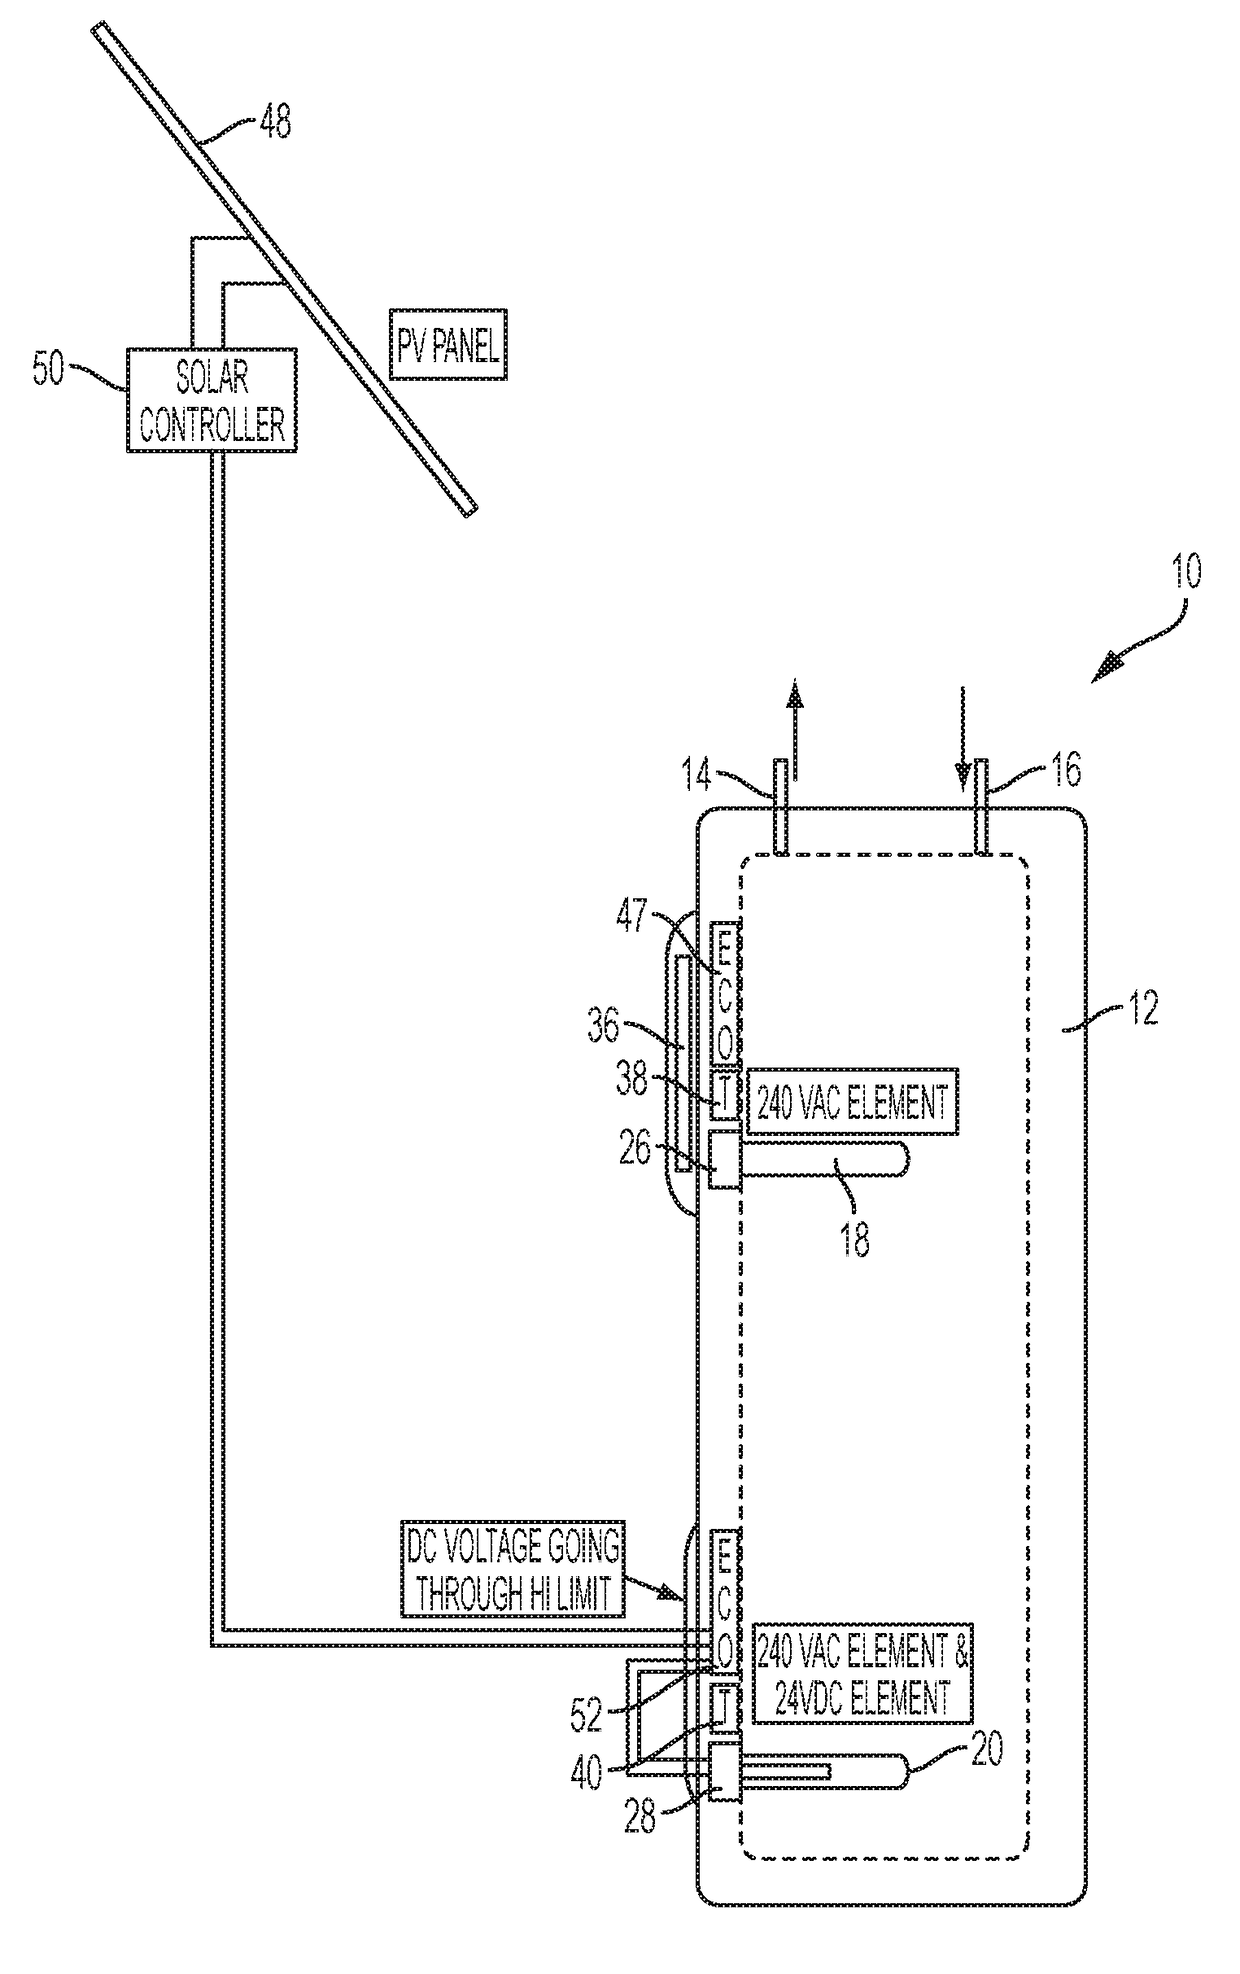 Water heater having a supplemental photovoltaic heating arrangement